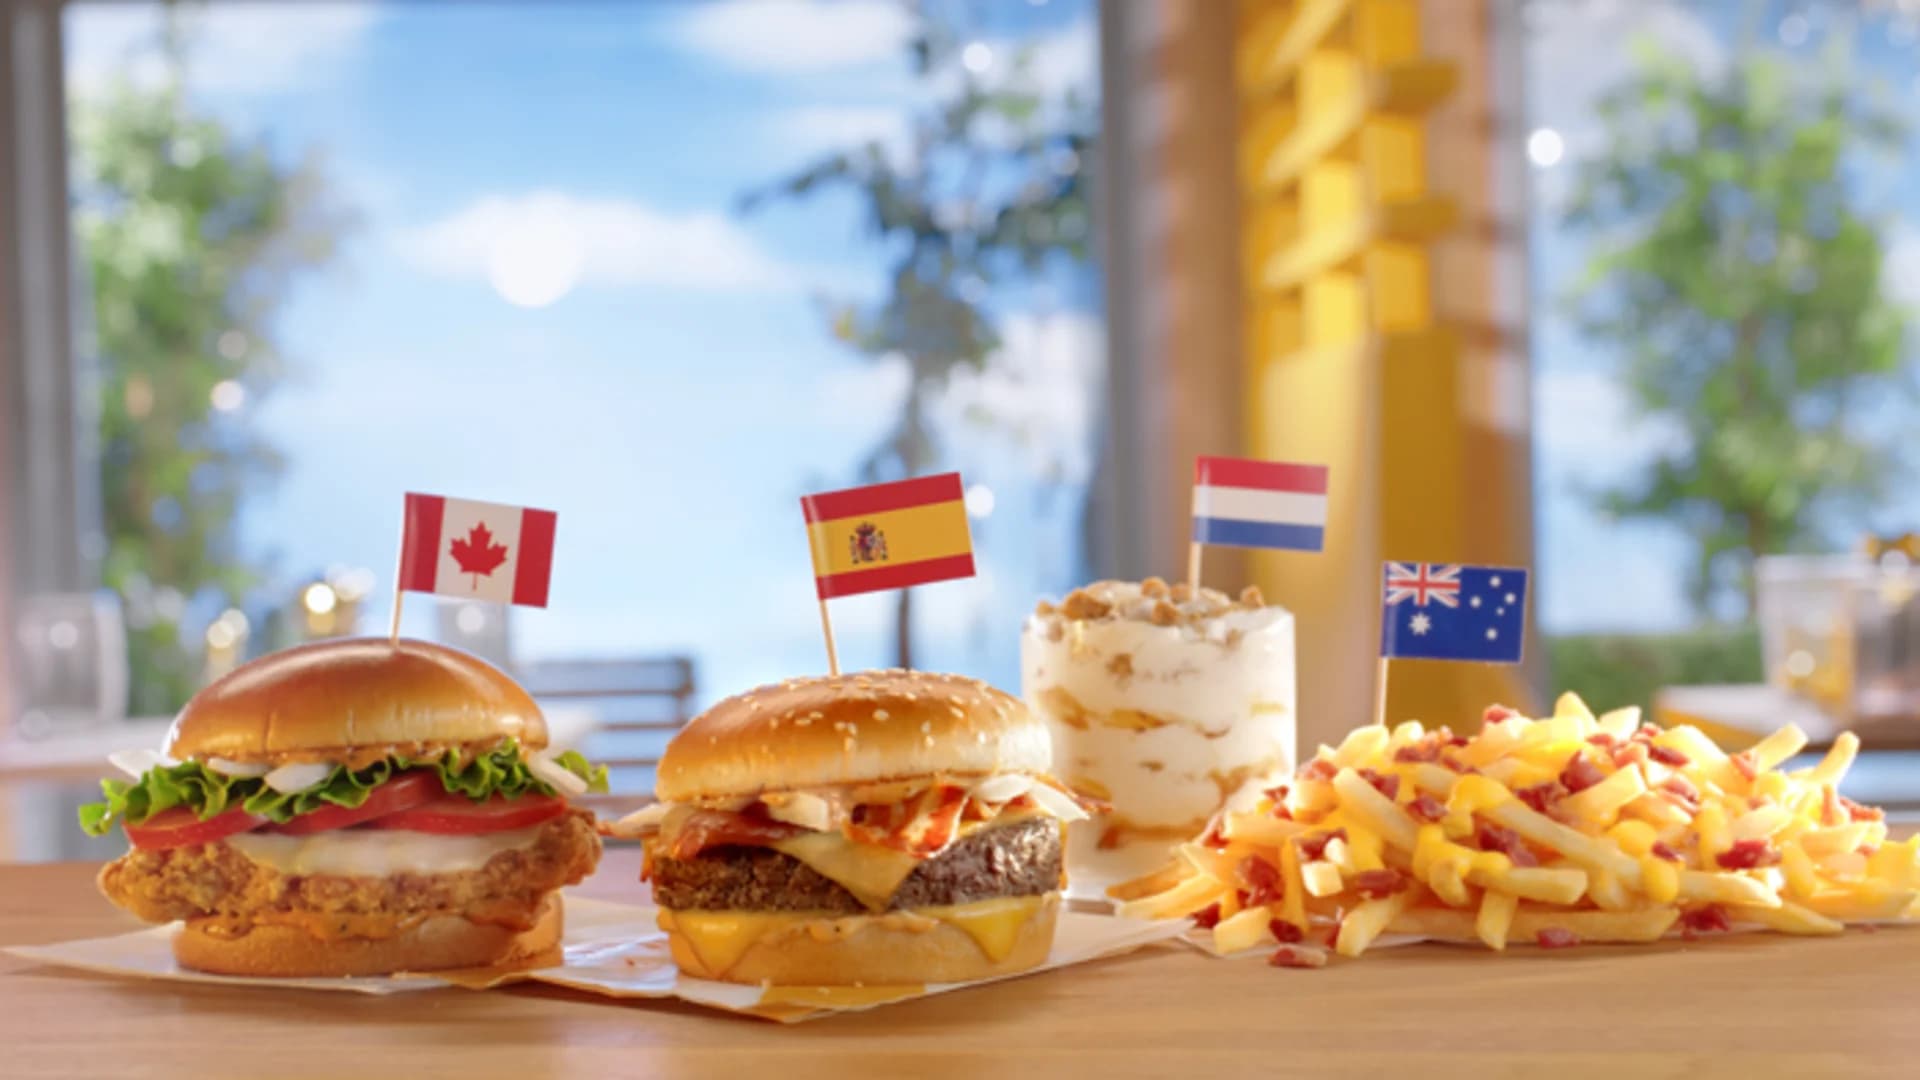 Going international! McDonald's bringing hits from around the world to US menus